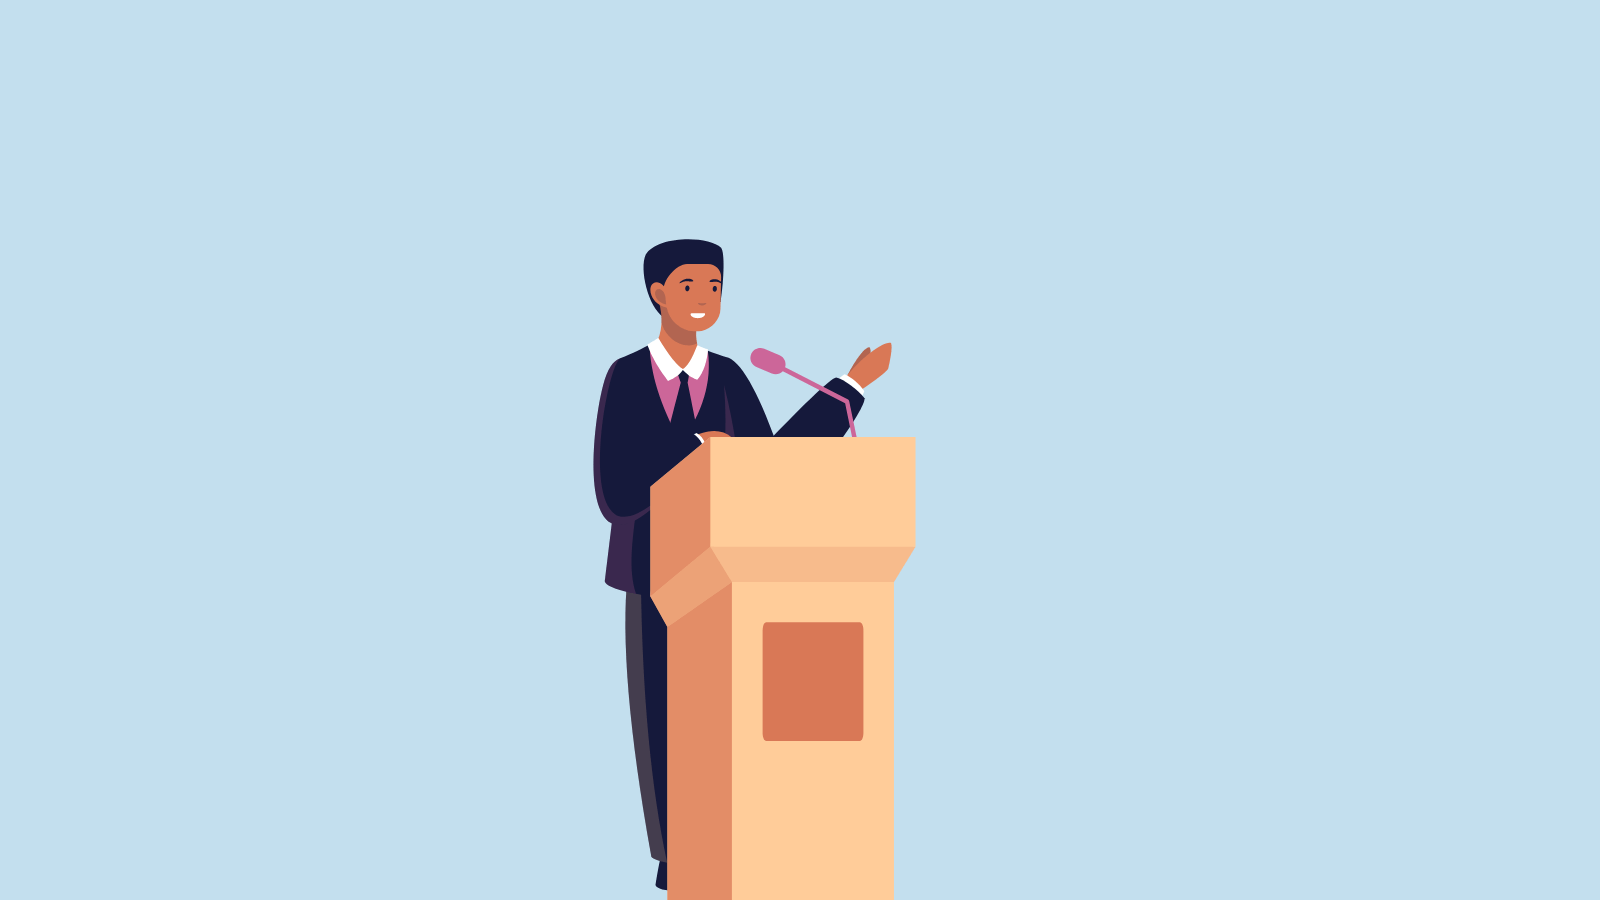 A person giving a speech at a podium